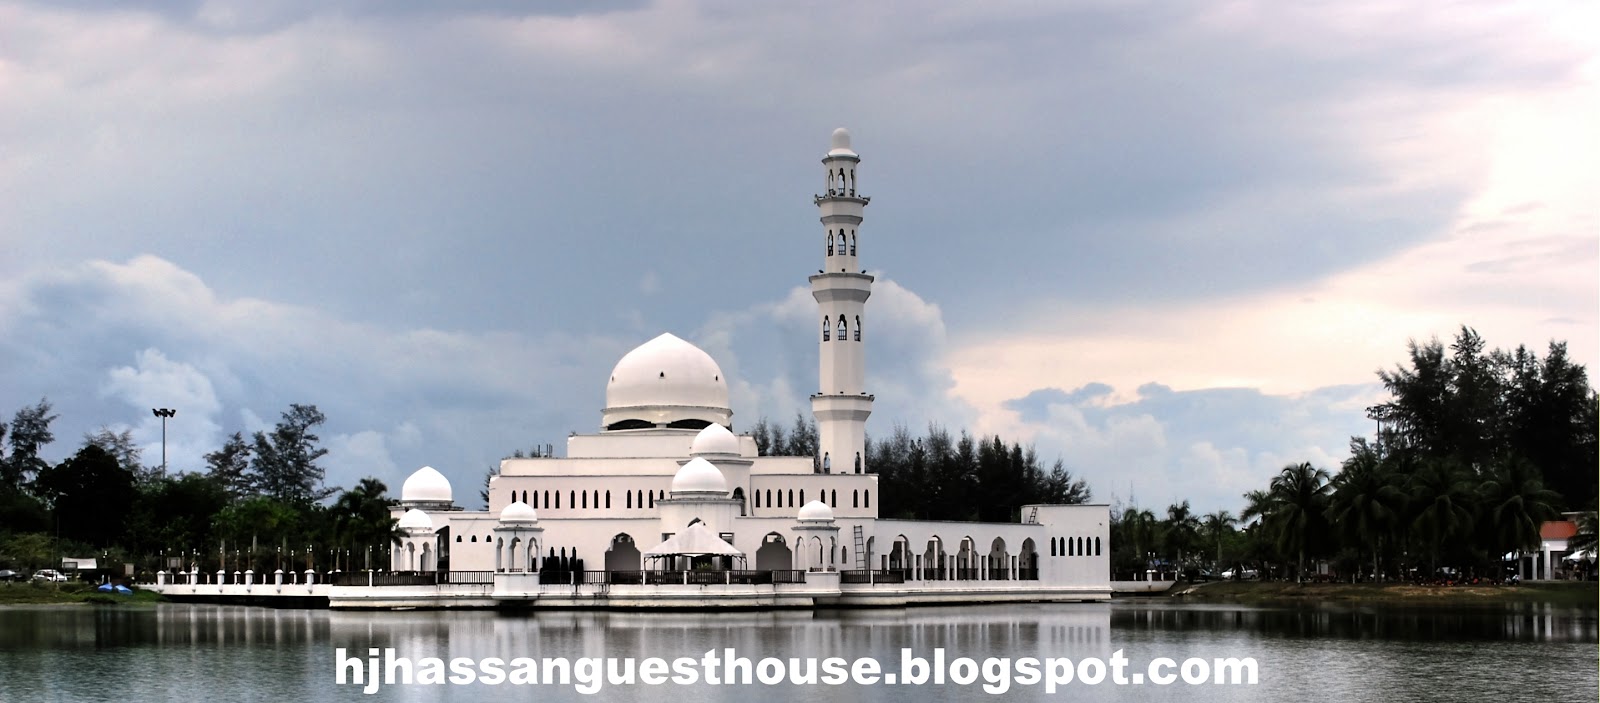 Haji Hassan Guest House Kuala Terengganu: Masjid Terapung ...